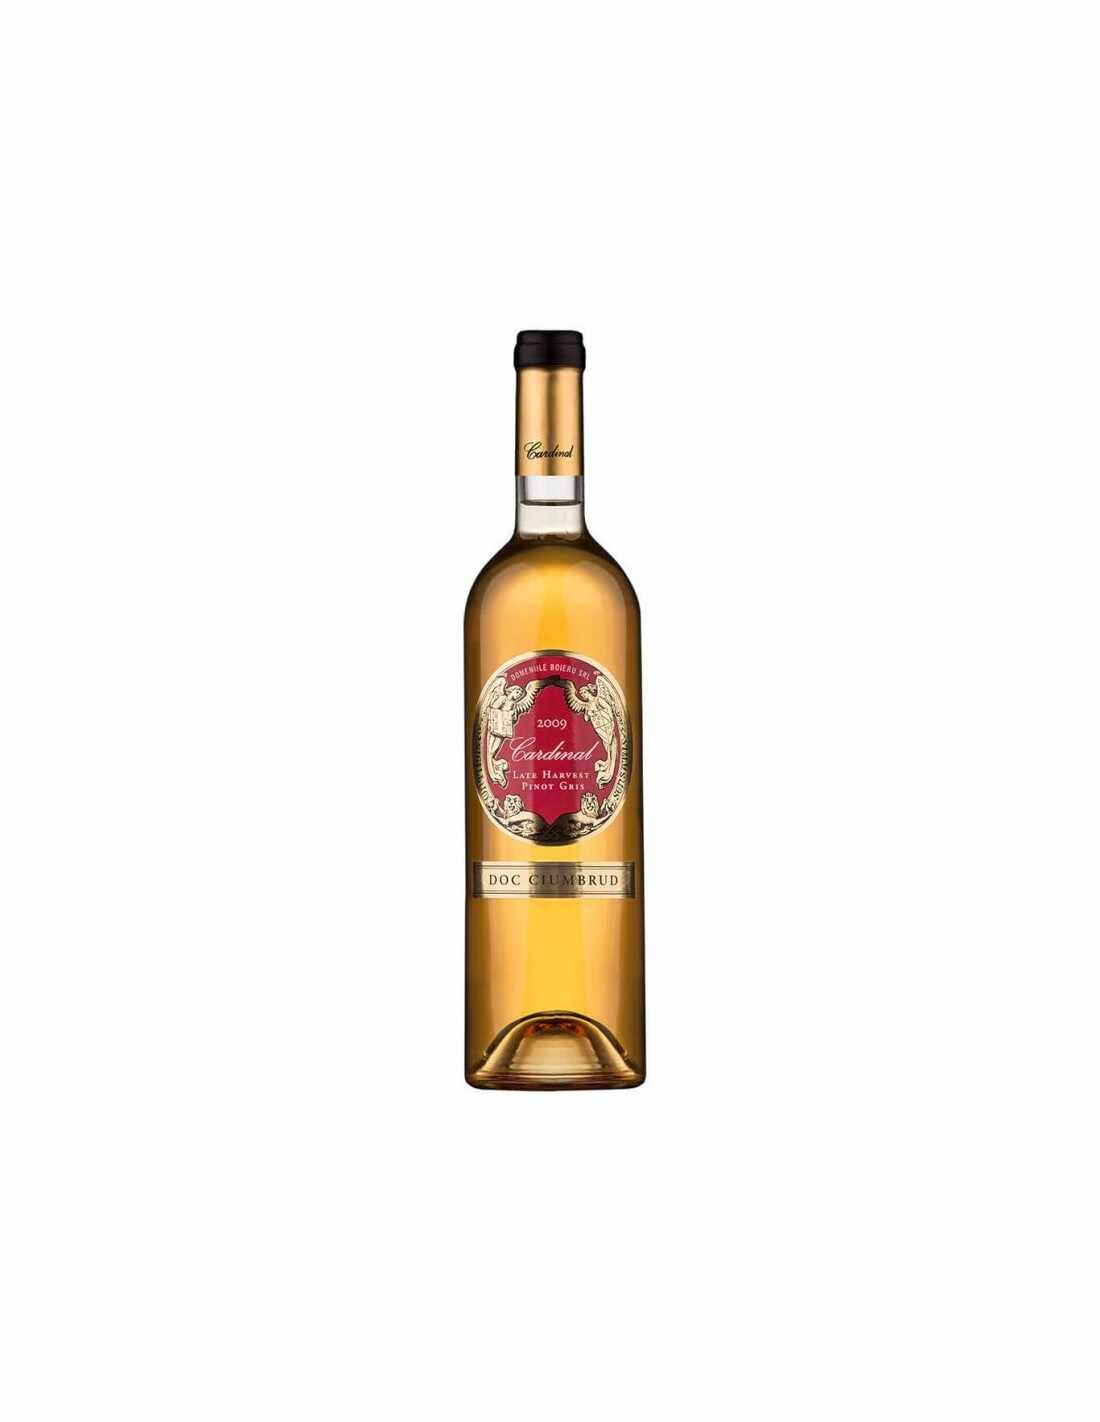 Vin alb dulce, Pinot Gris, Cardinal, Ciumbrud, 0.75L, 11% alc., Romania